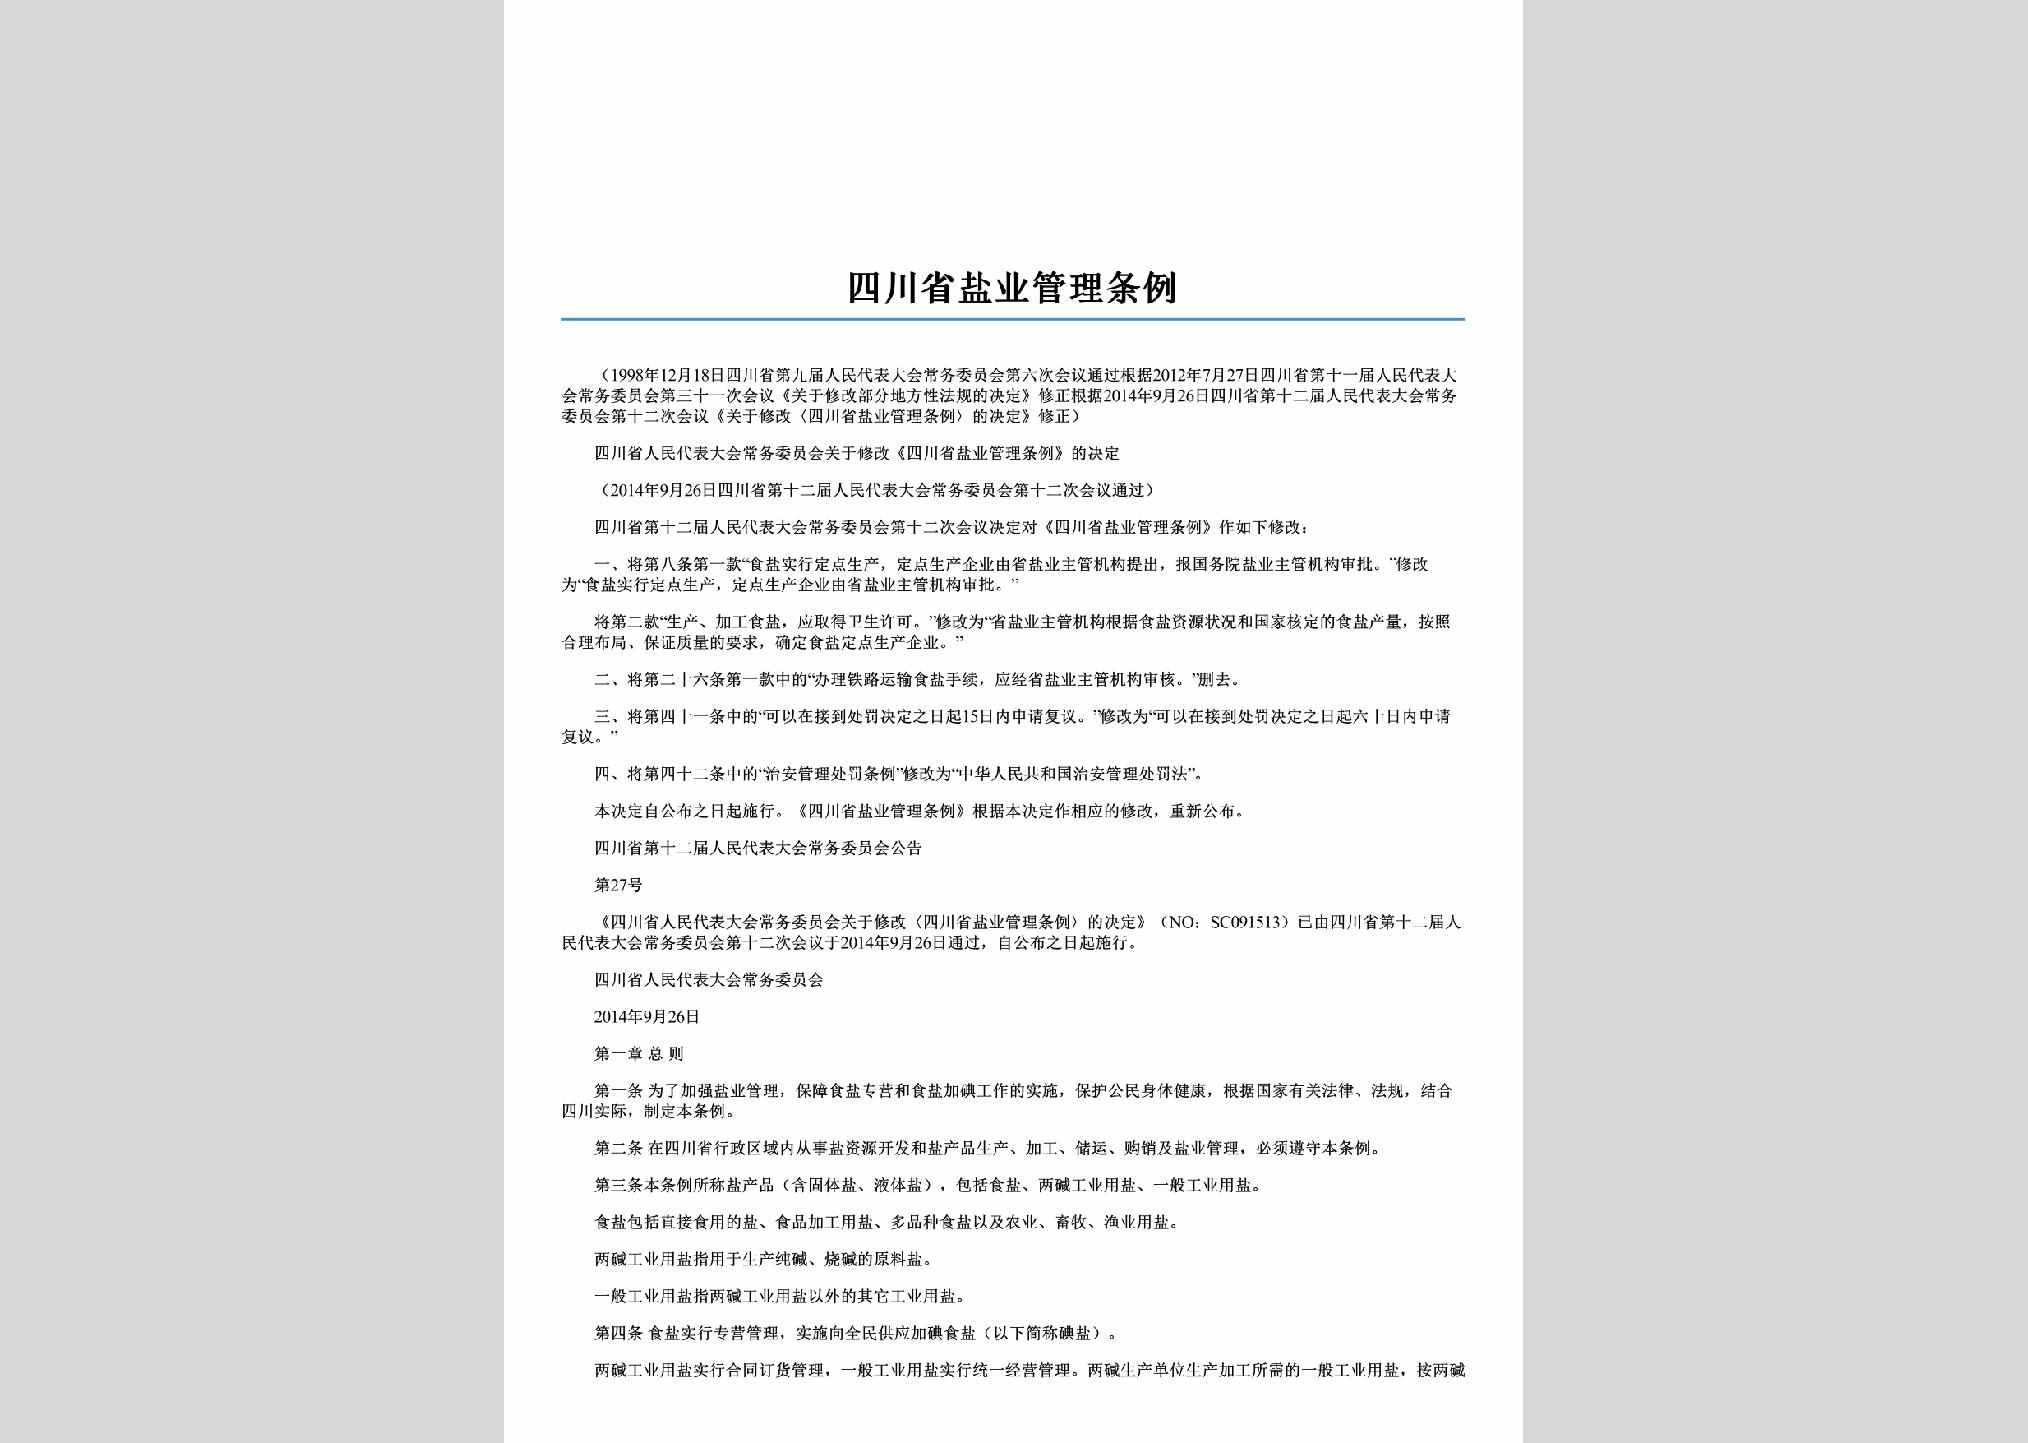 SC-YYGLTL-2014：四川省盐业管理条例